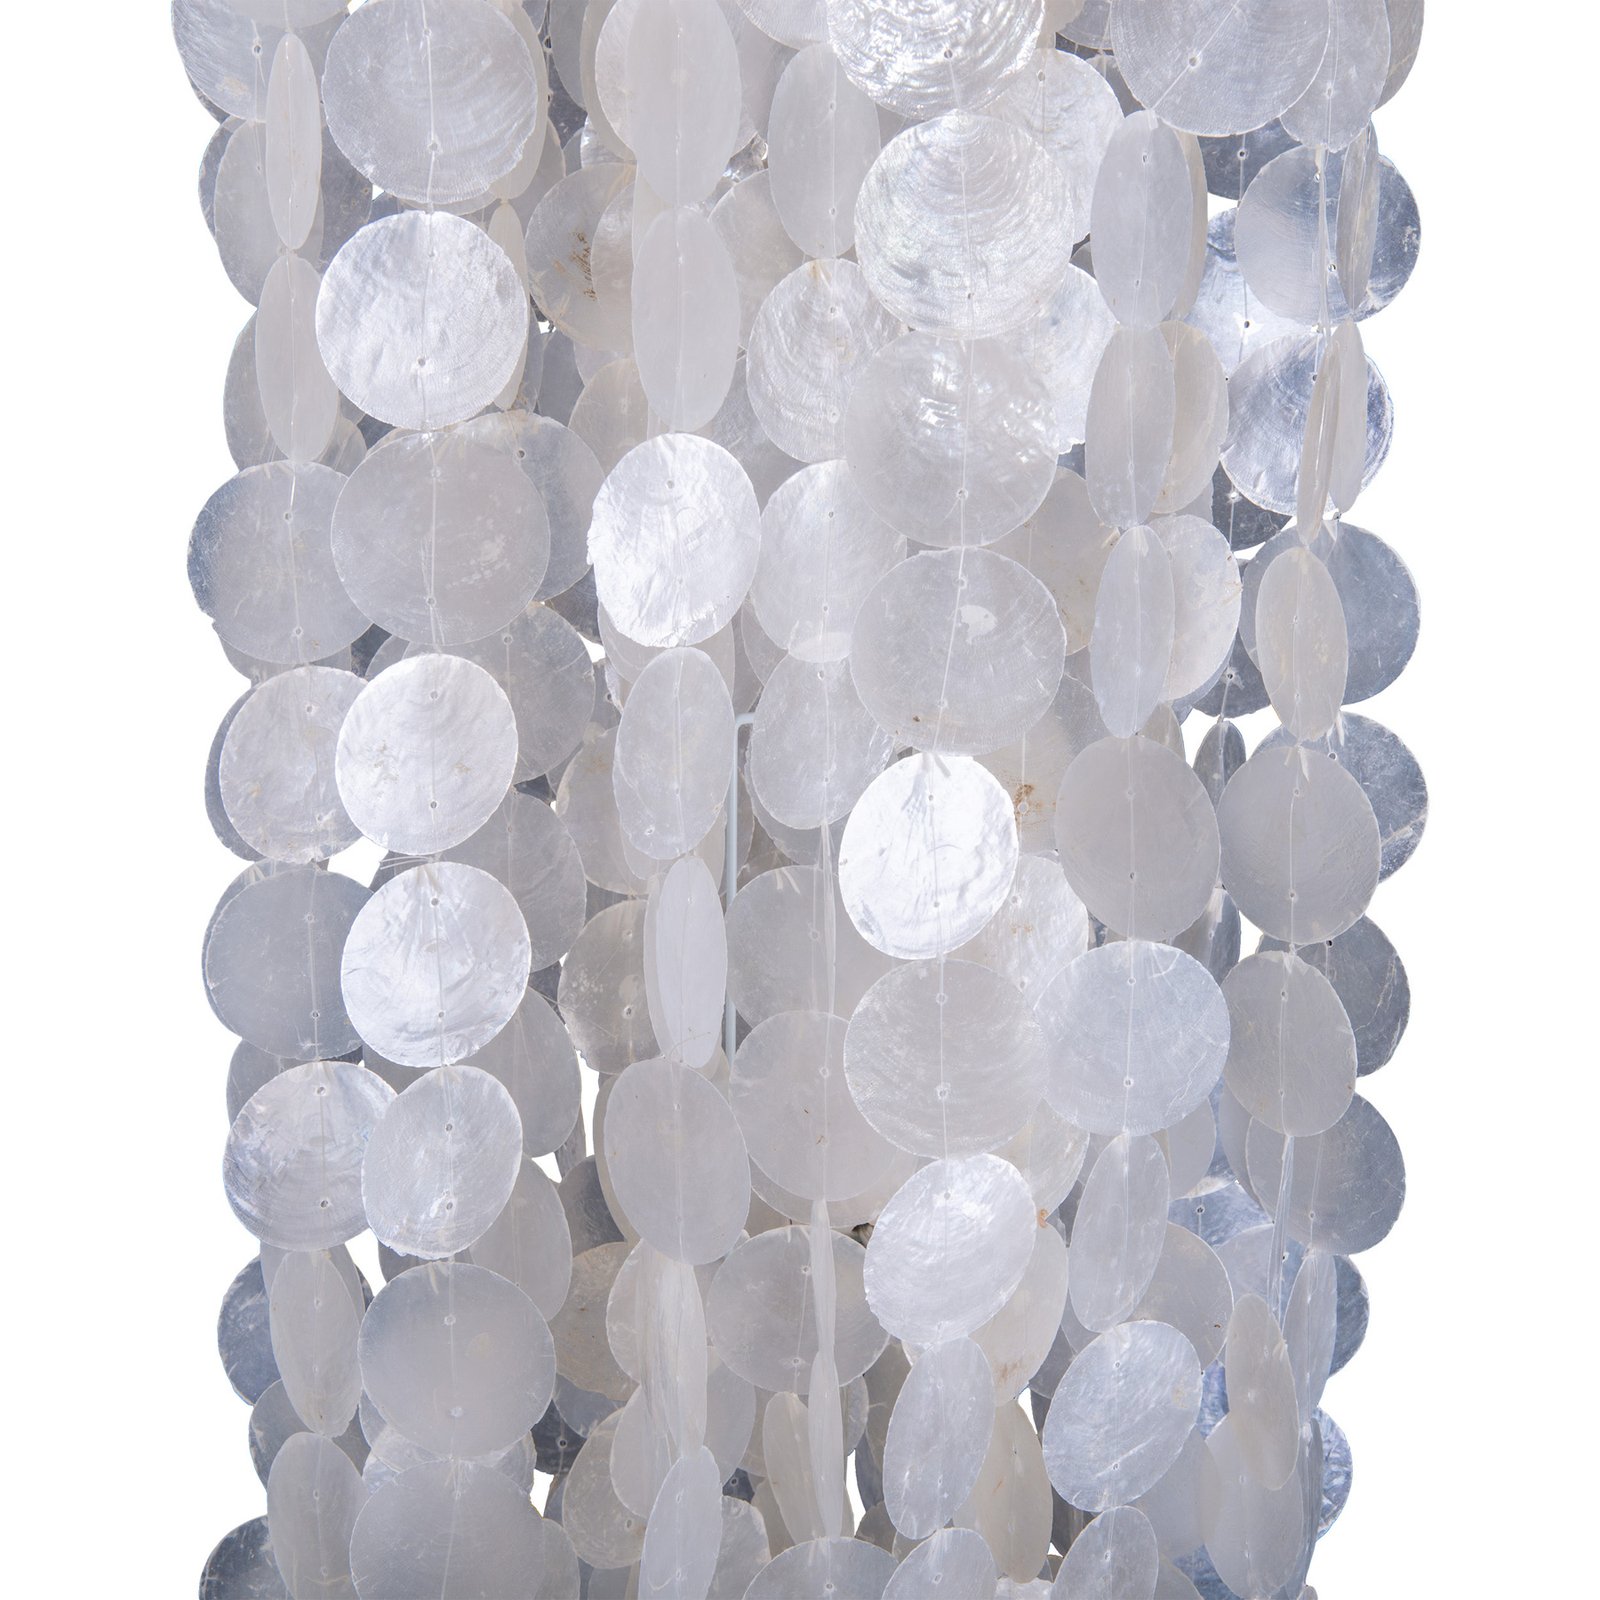 Capiz pendant light with shells, 235 cm high